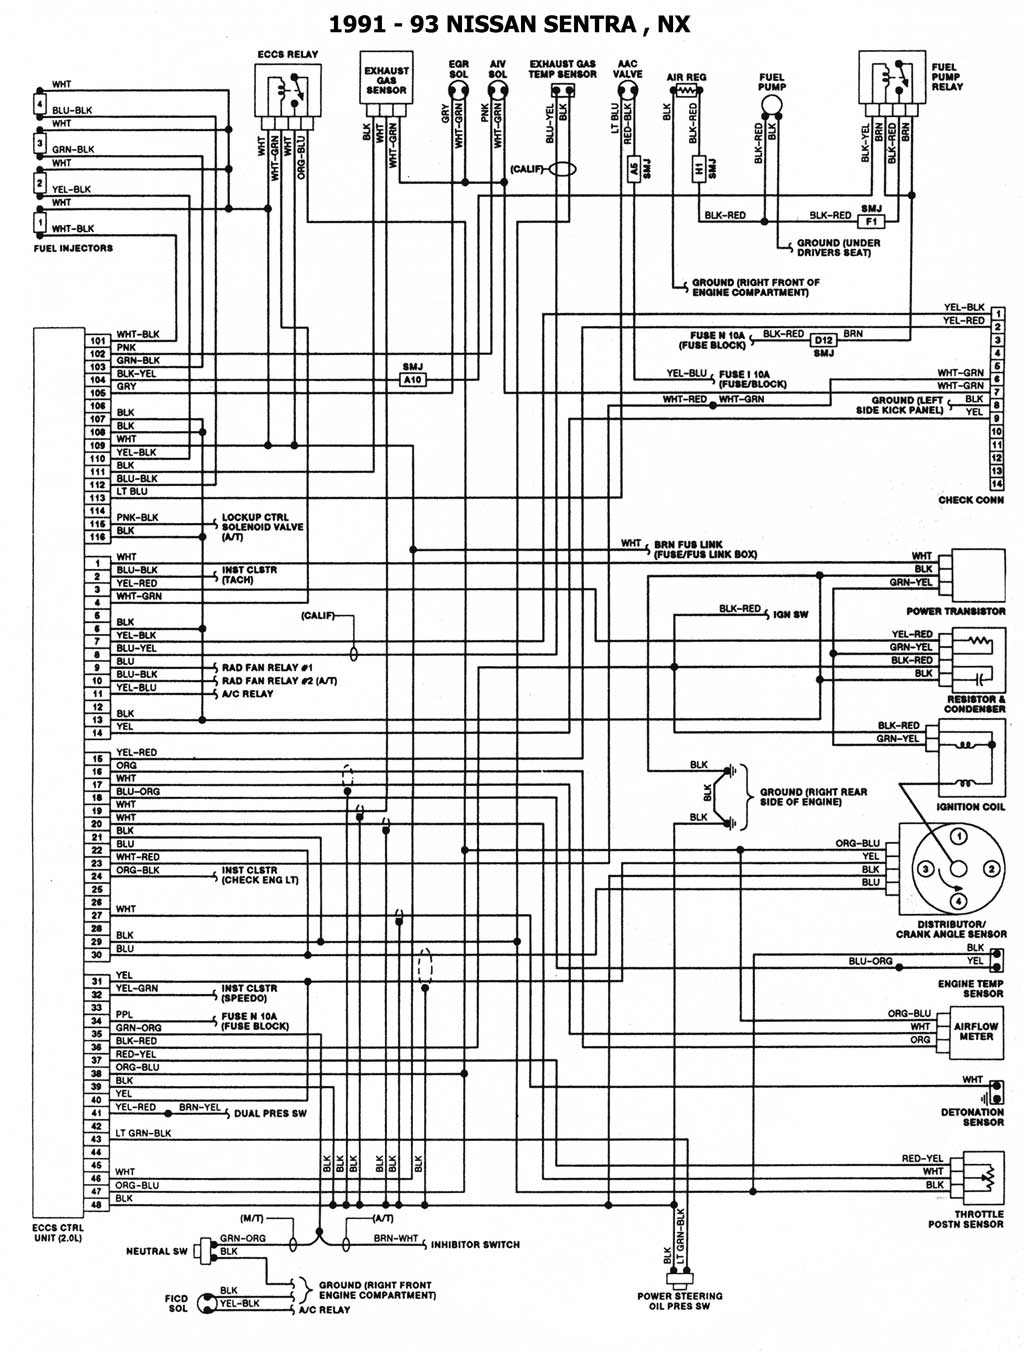 1991 Nissan terrano wiring diagram #6